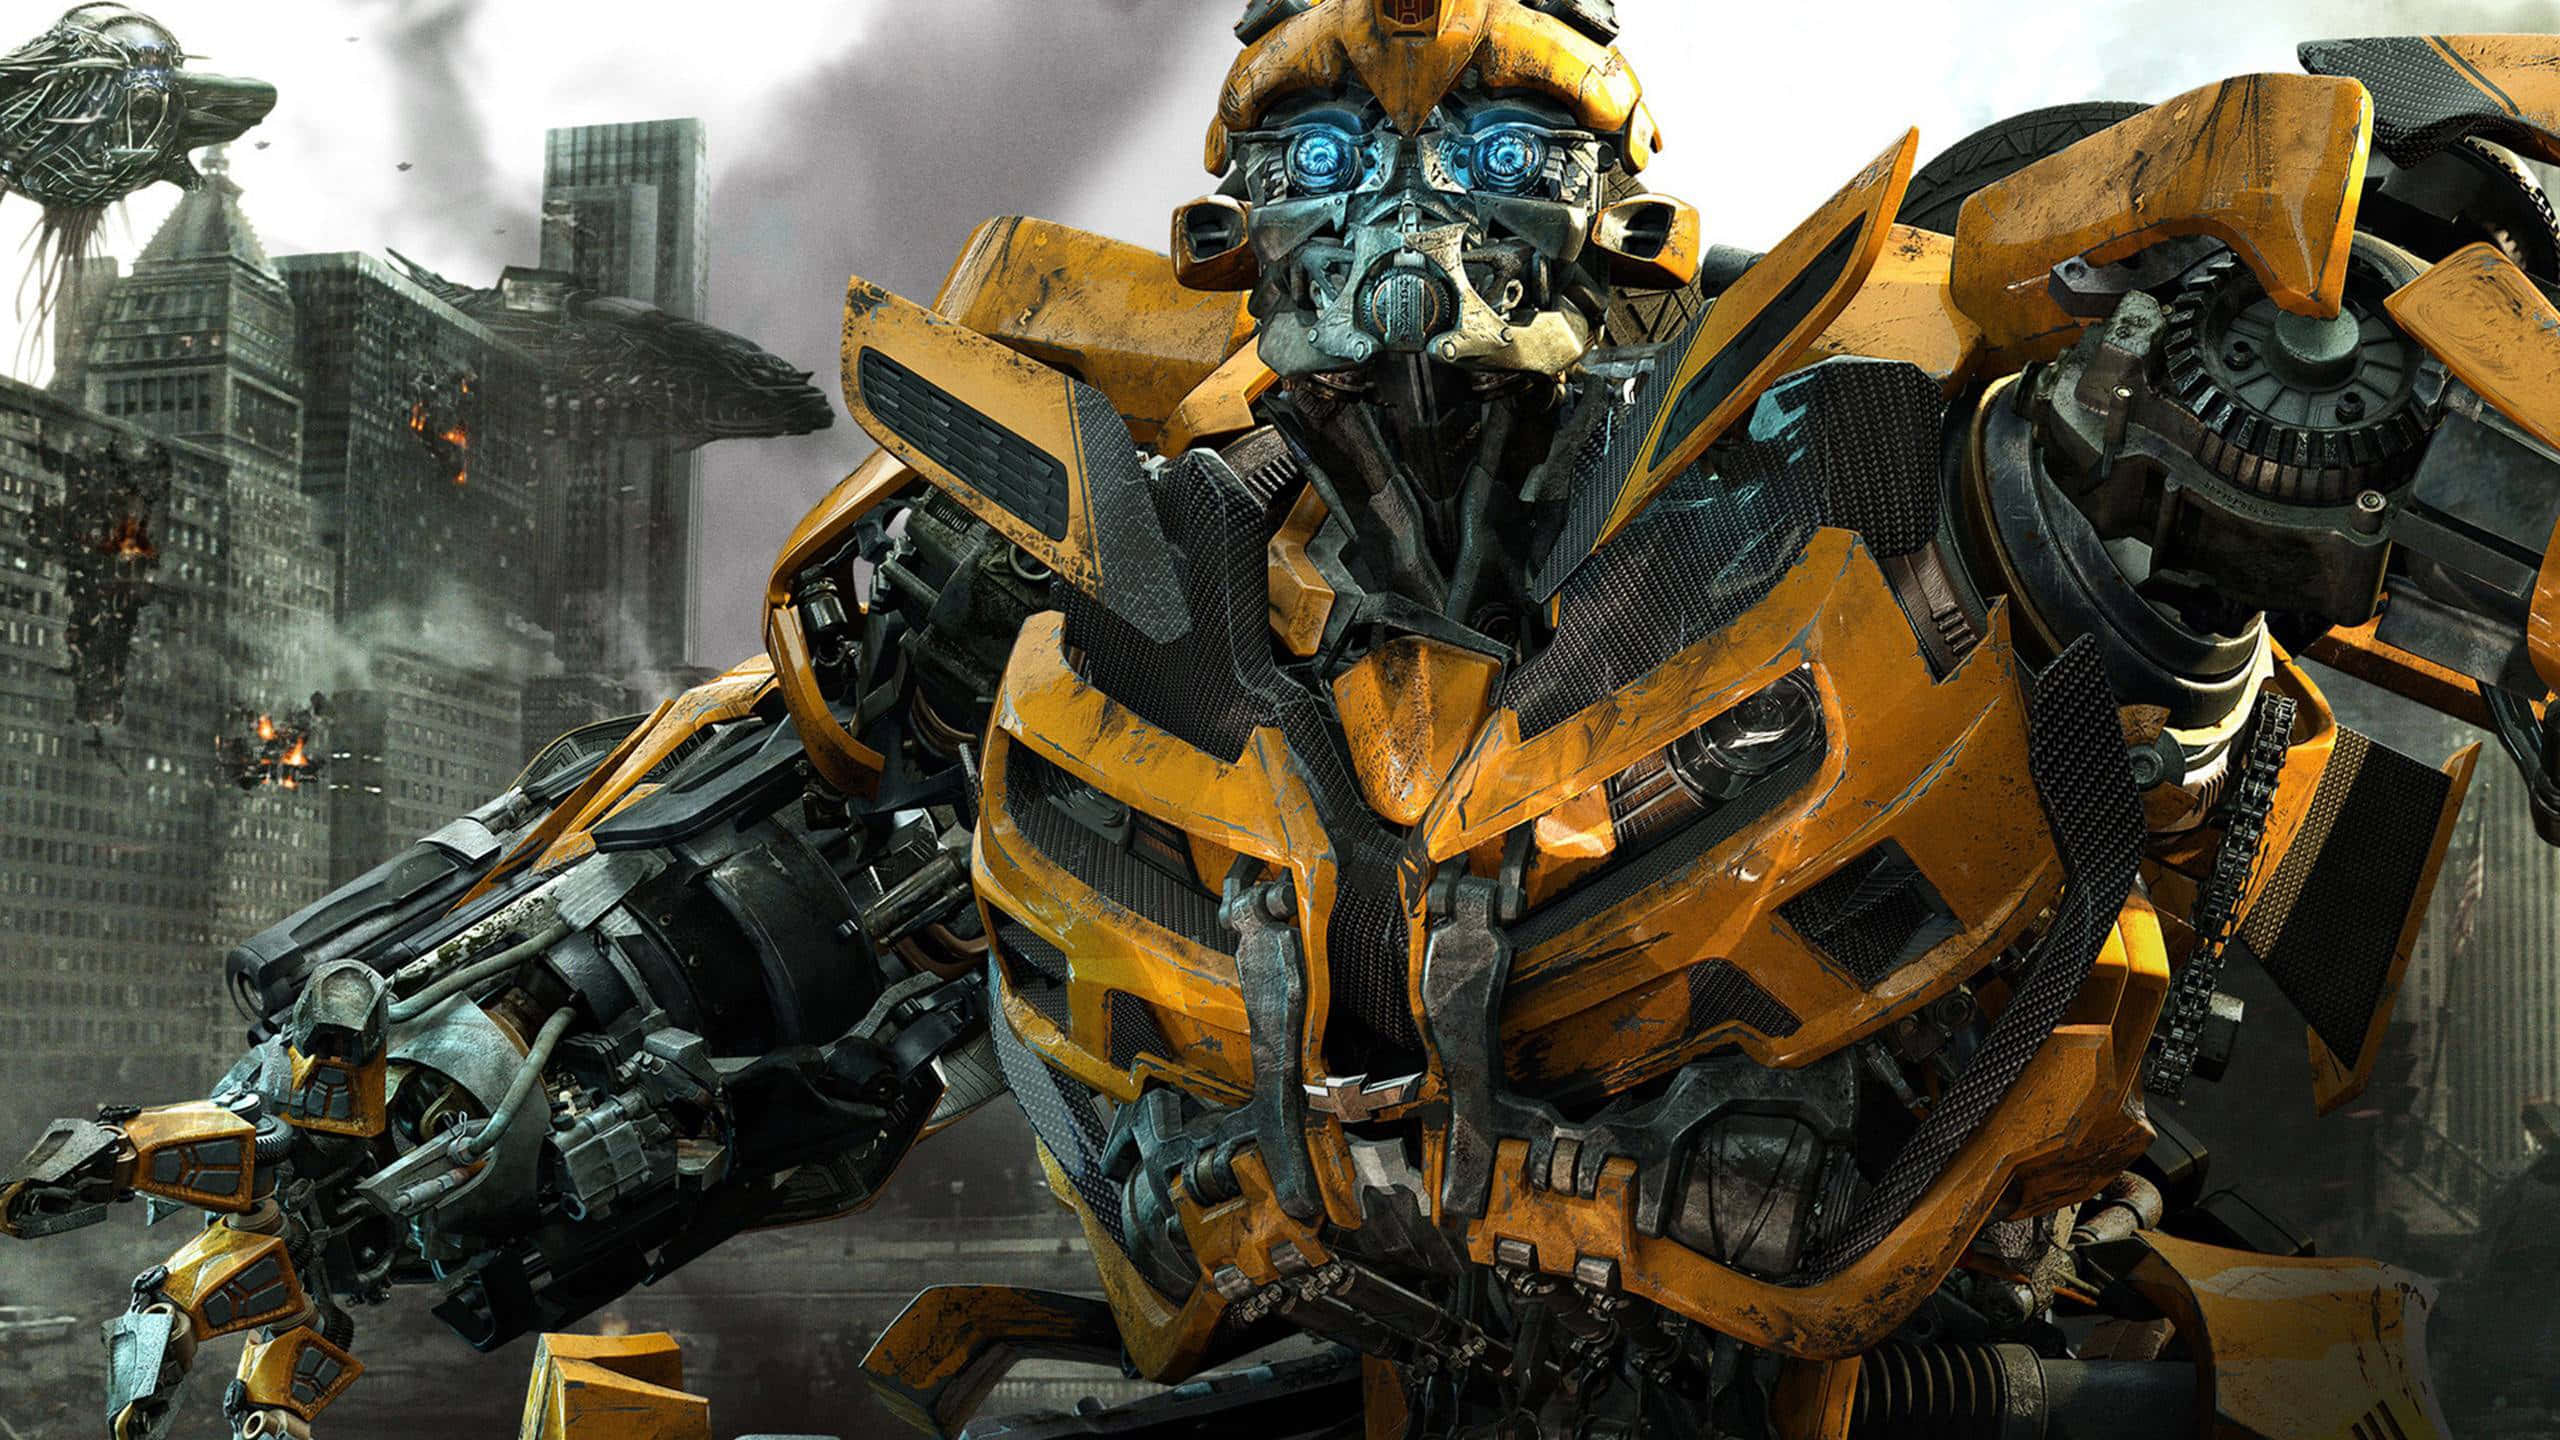 Transformersden Sista Riddaren - Bumblebee